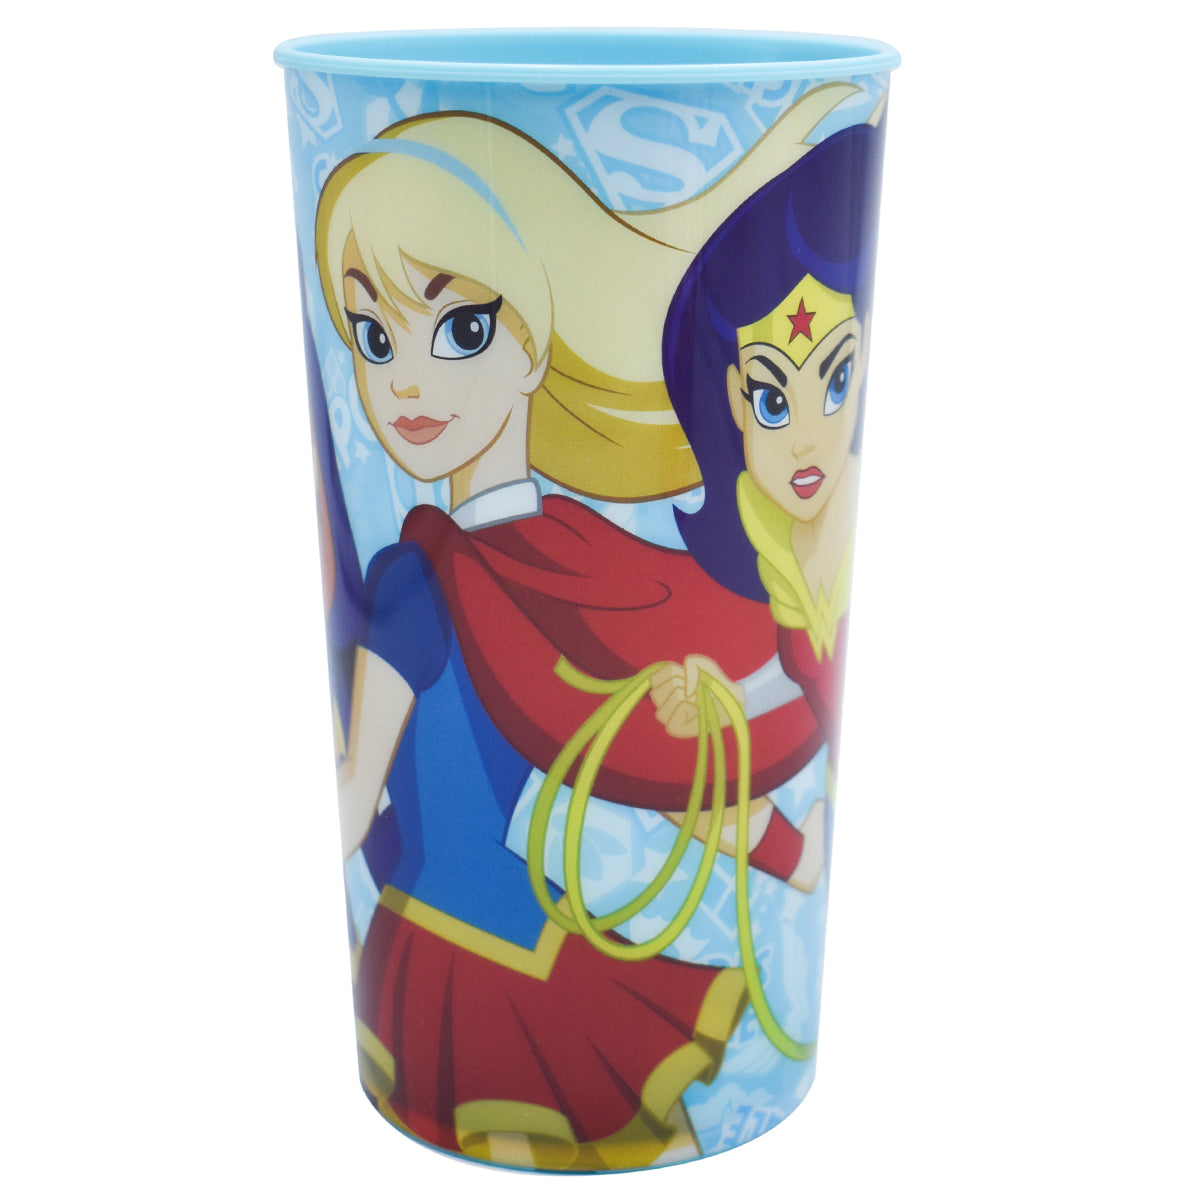 Tazon / Vaso por Pieza Fun Kids Super Hero Girls / Super Heroes Chicas / Wonder Woman / Mujer Maravilla Melamina / Plastico